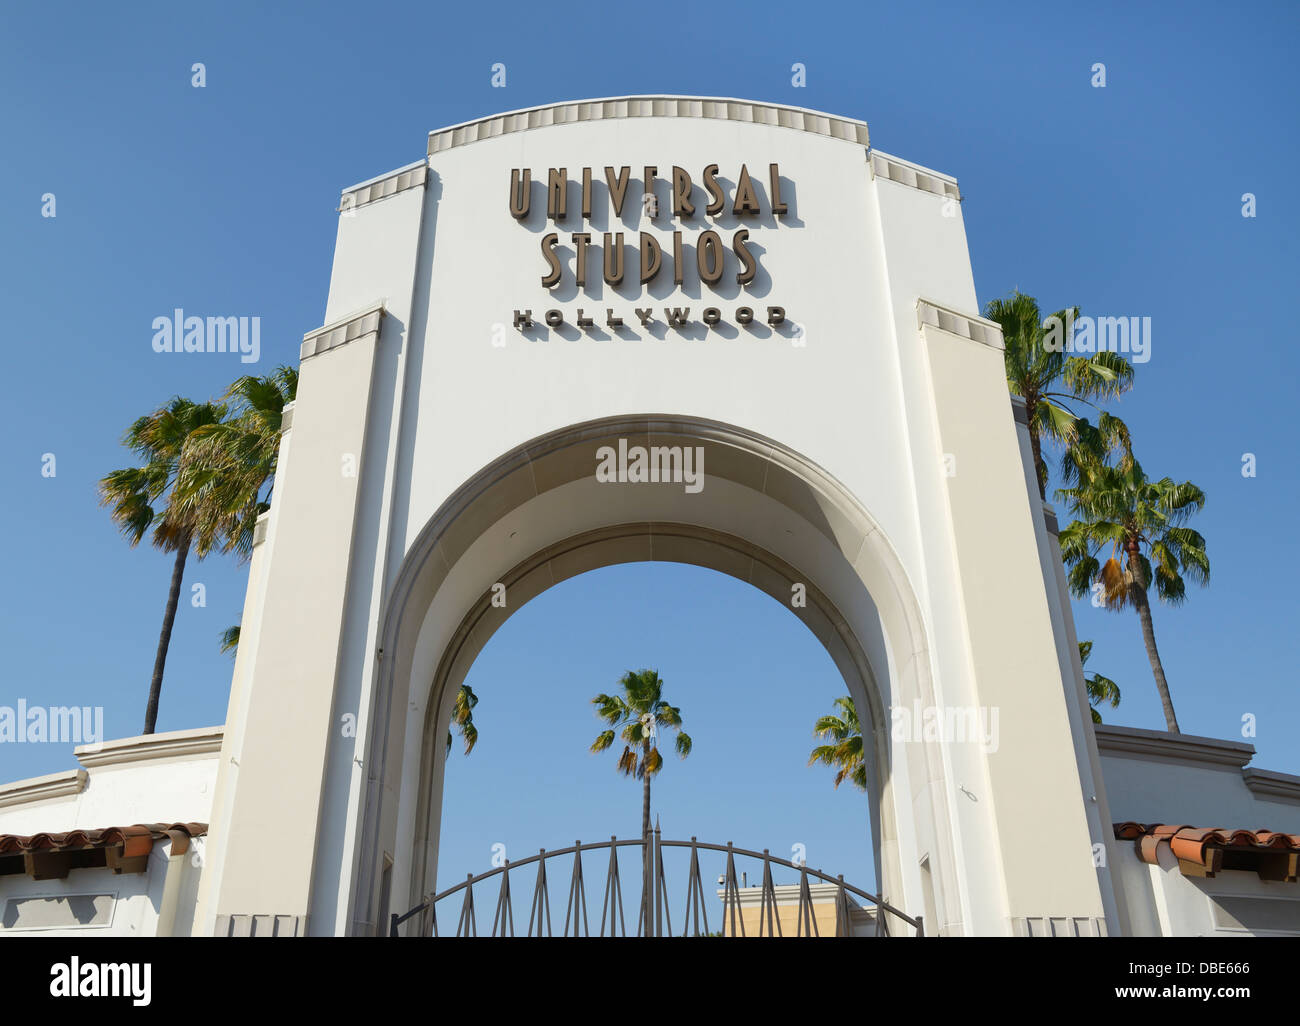 L'entrée des Studios Universal, Hollywood, CA Banque D'Images